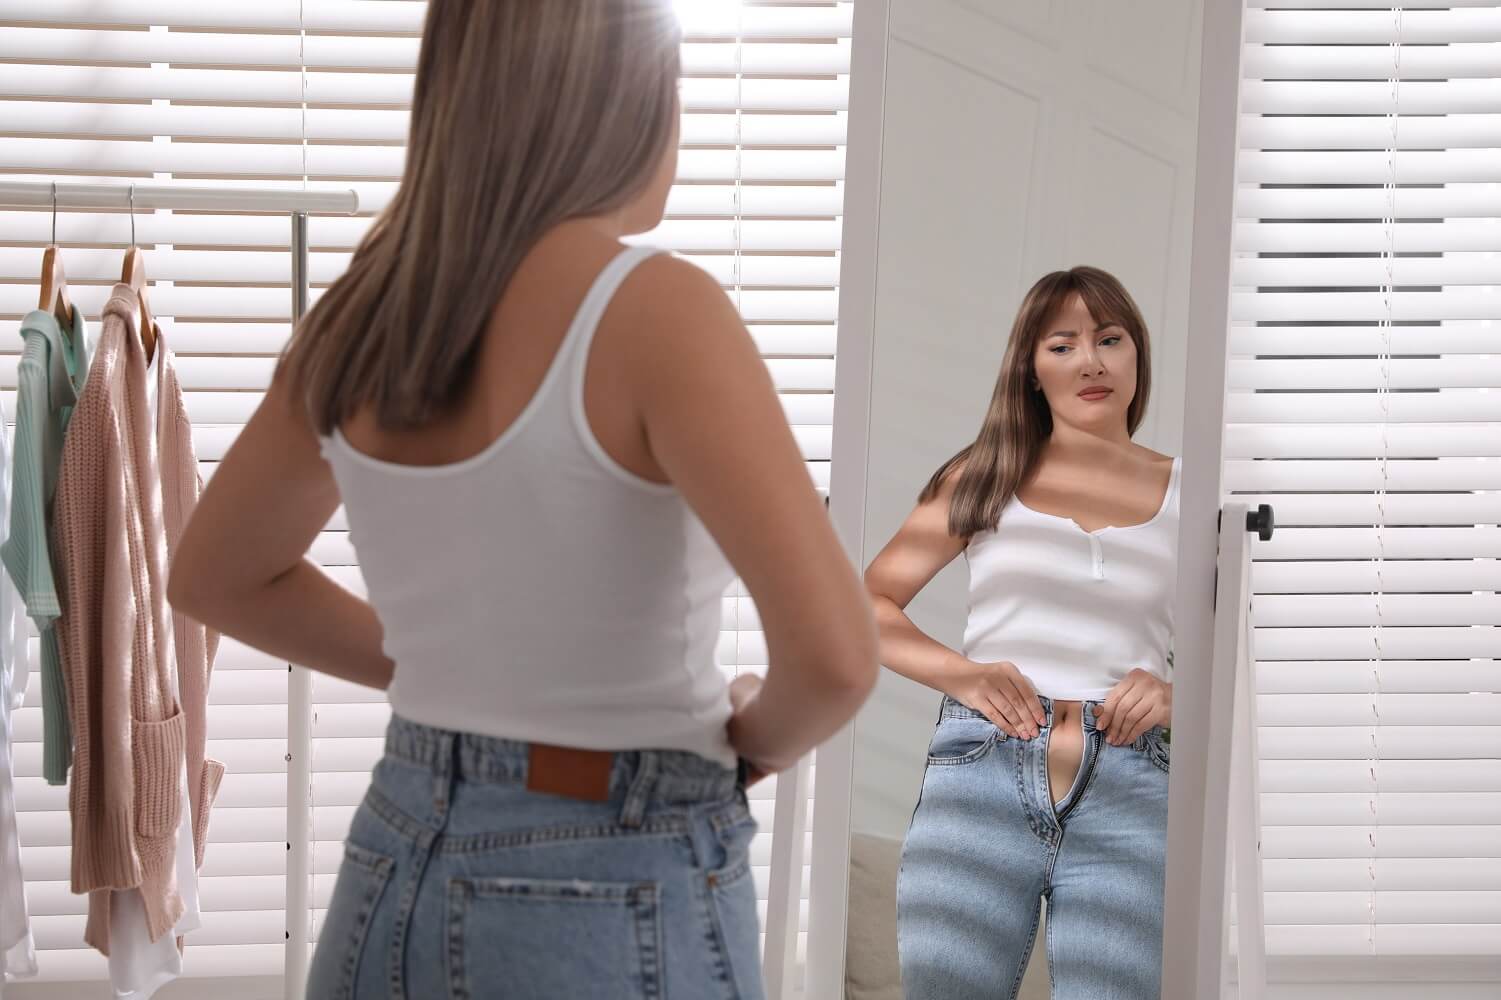 https://mejorconsalud.as.com/wp-content/uploads/2015/07/mujer-jeans-ajustados.jpg